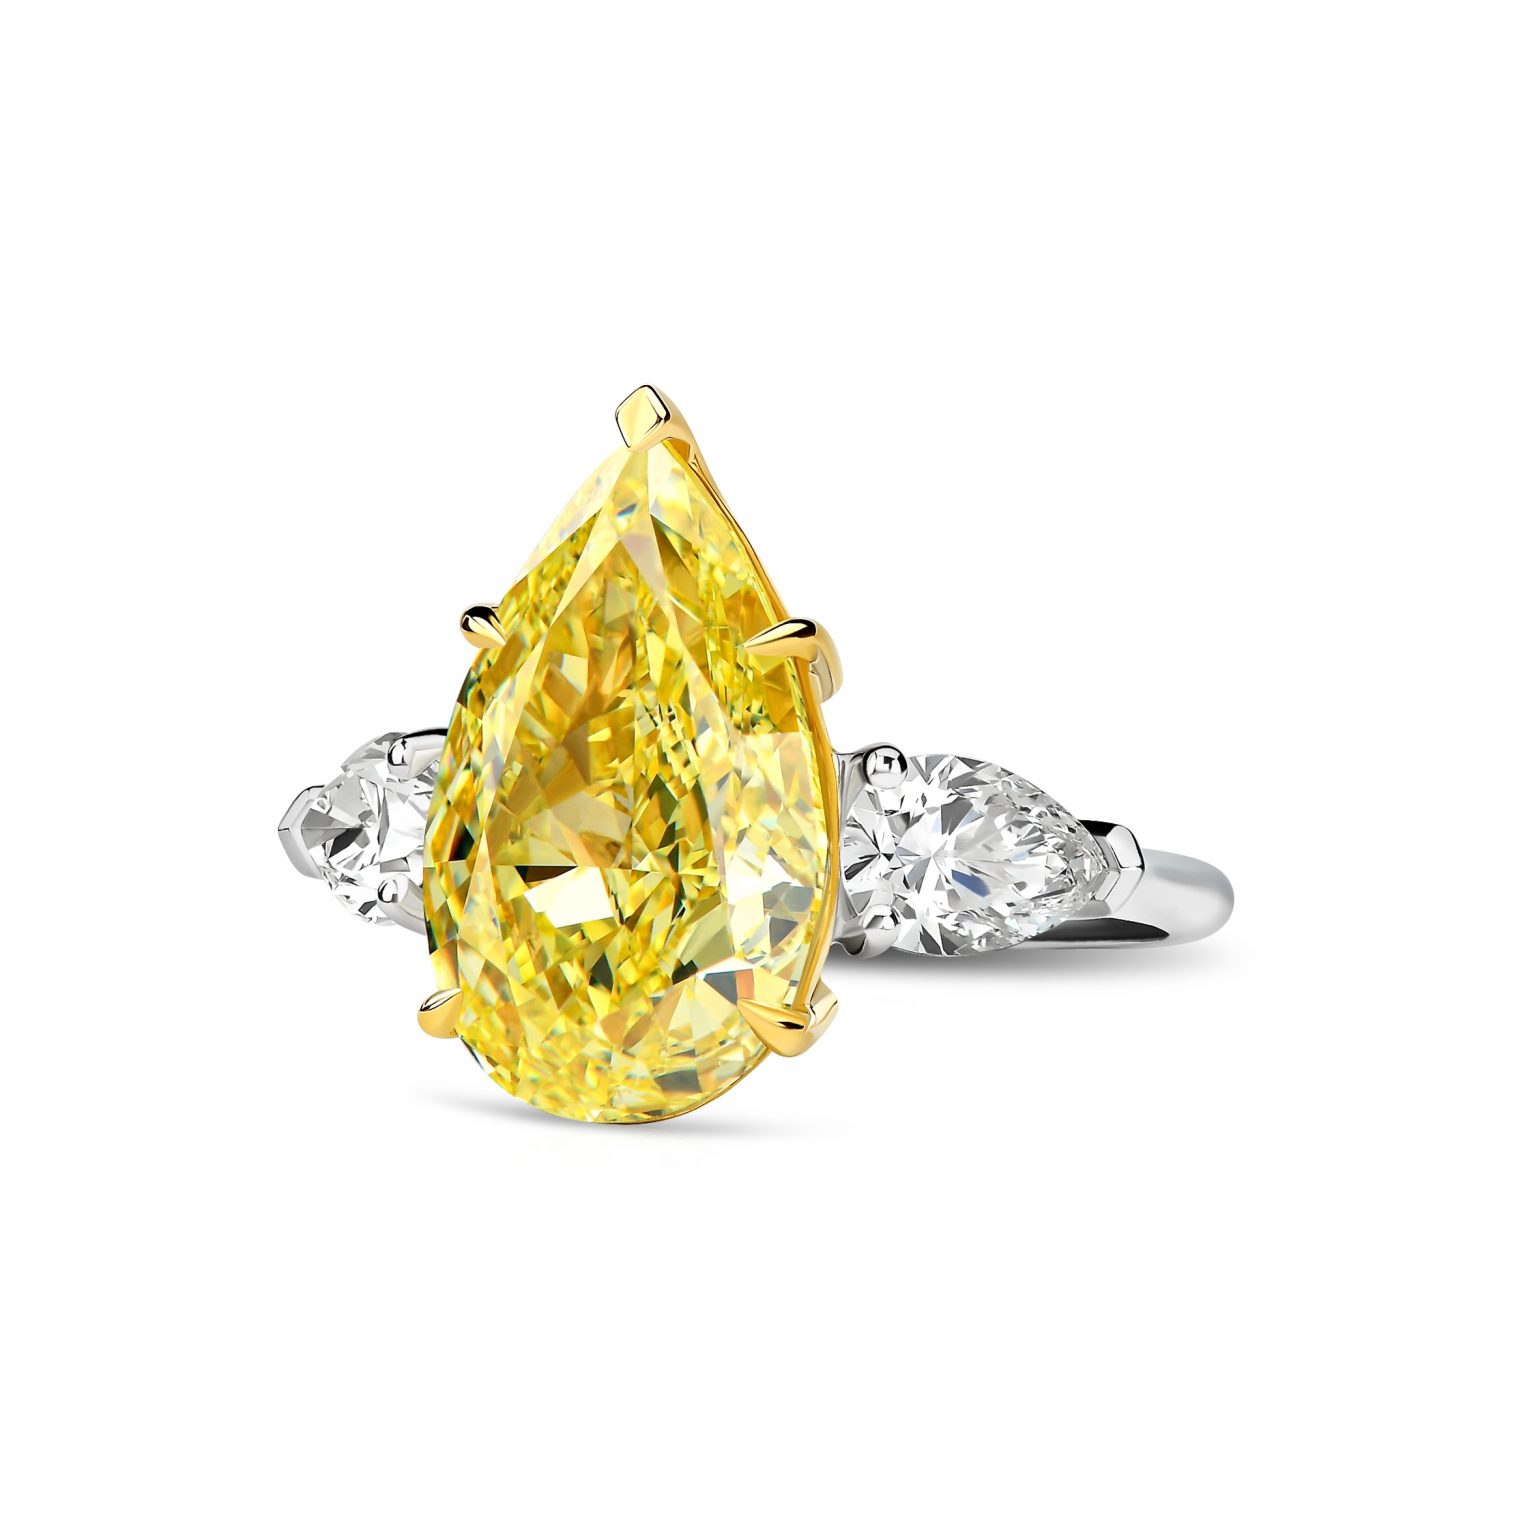 2.26 Carat Pear-Shaped Yellow Diamond Ring